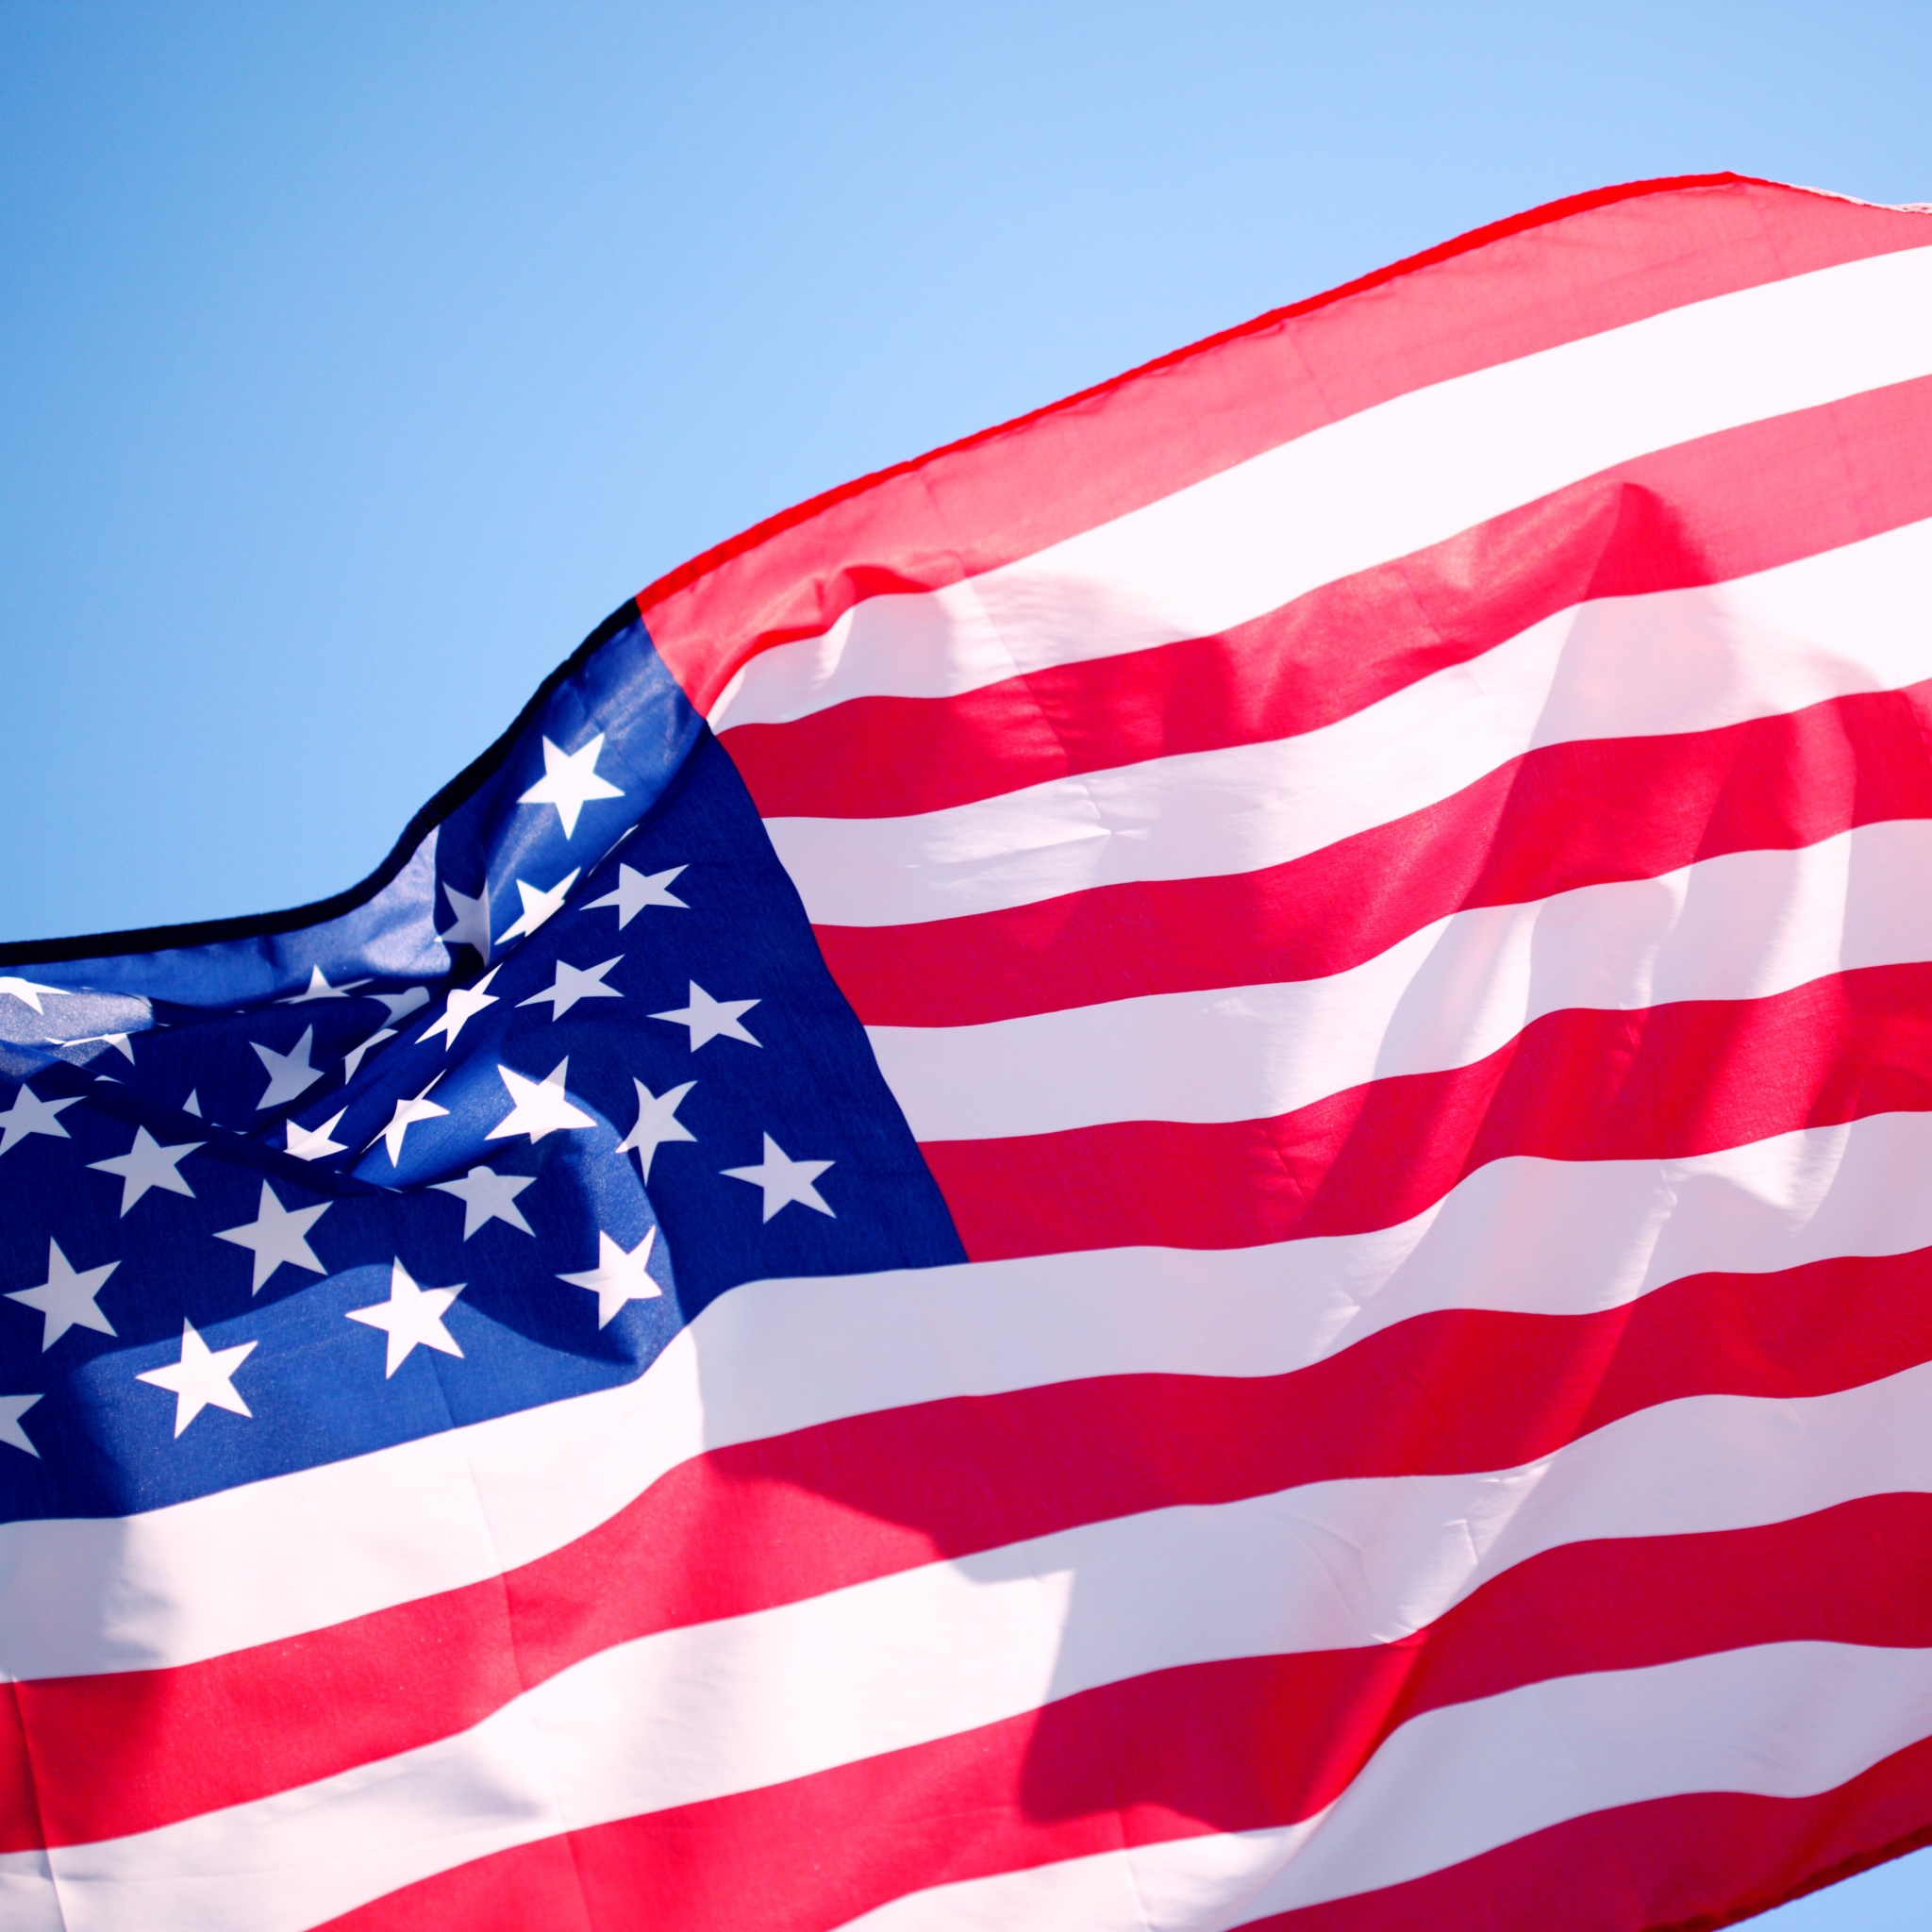 Free download American Flag Wallpaper hd Iphone 640x960 American Flag Iphone  4 640x960 for your Desktop Mobile  Tablet  Explore 49 American Flag  iPhone 5 Wallpaper  American Flag Backgrounds American